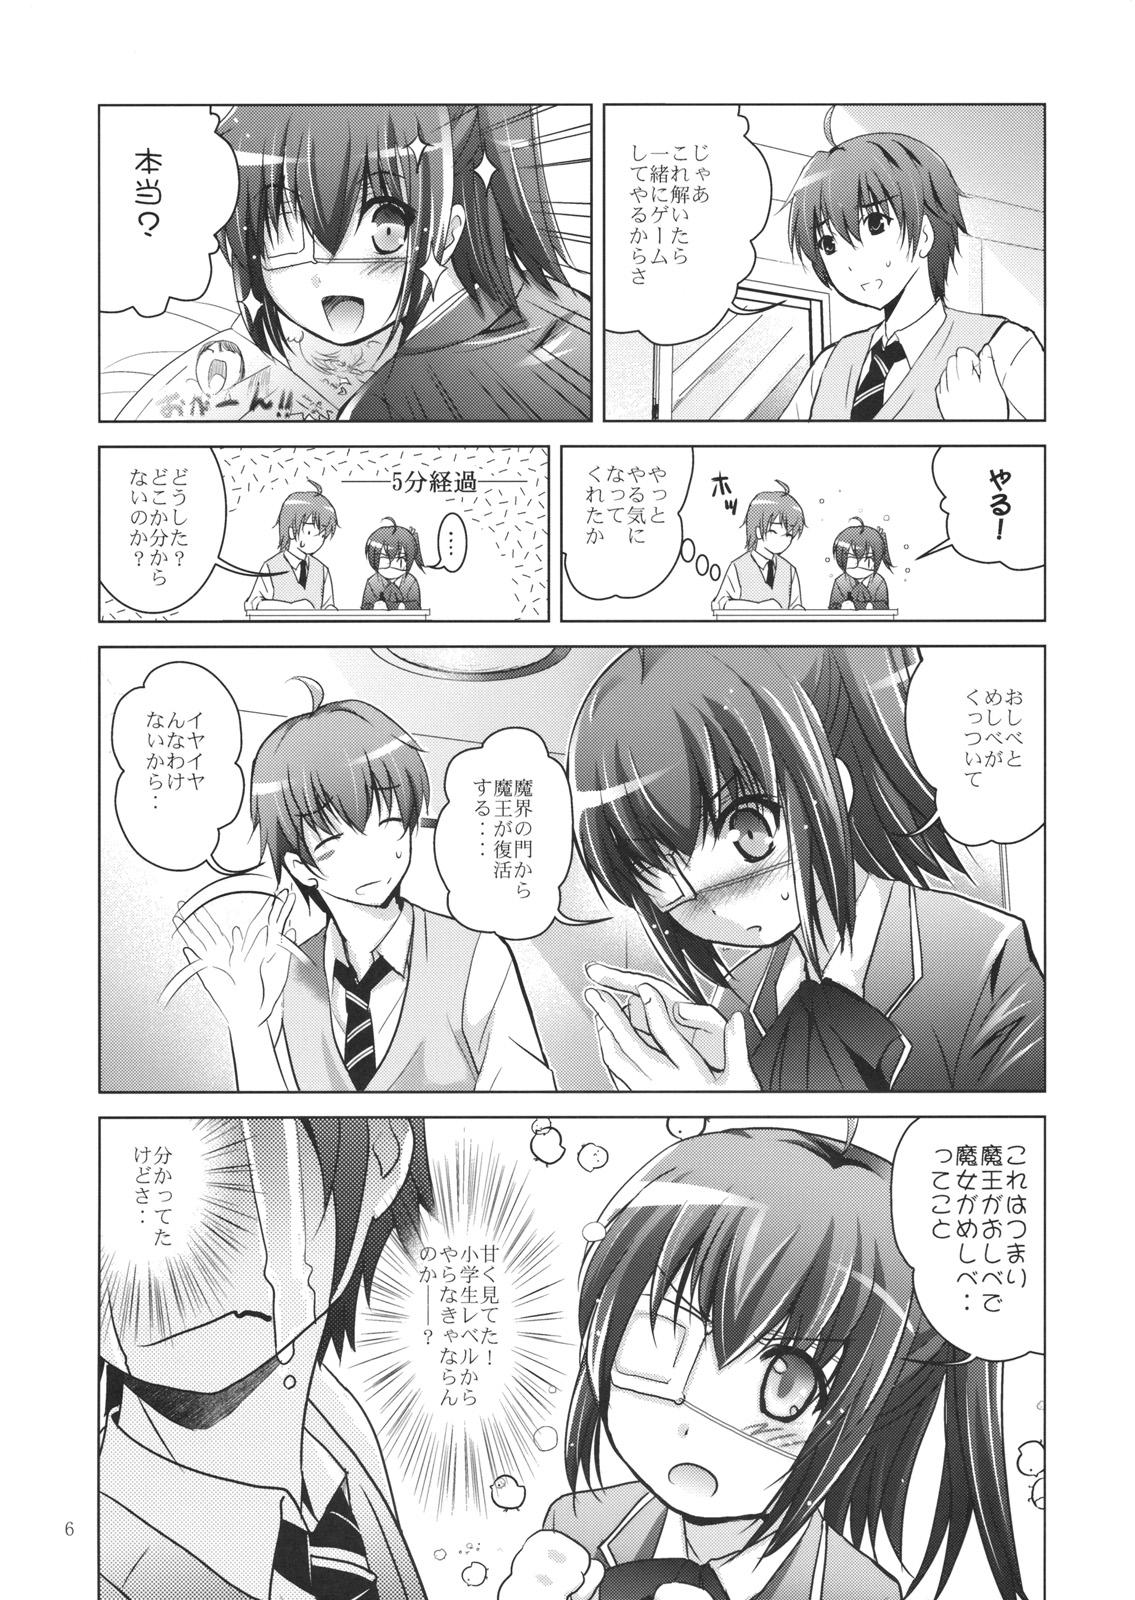 Uncensored MOUSOU Mini Theater 31 - Chuunibyou demo koi ga shitai Gay Physicals - Page 5